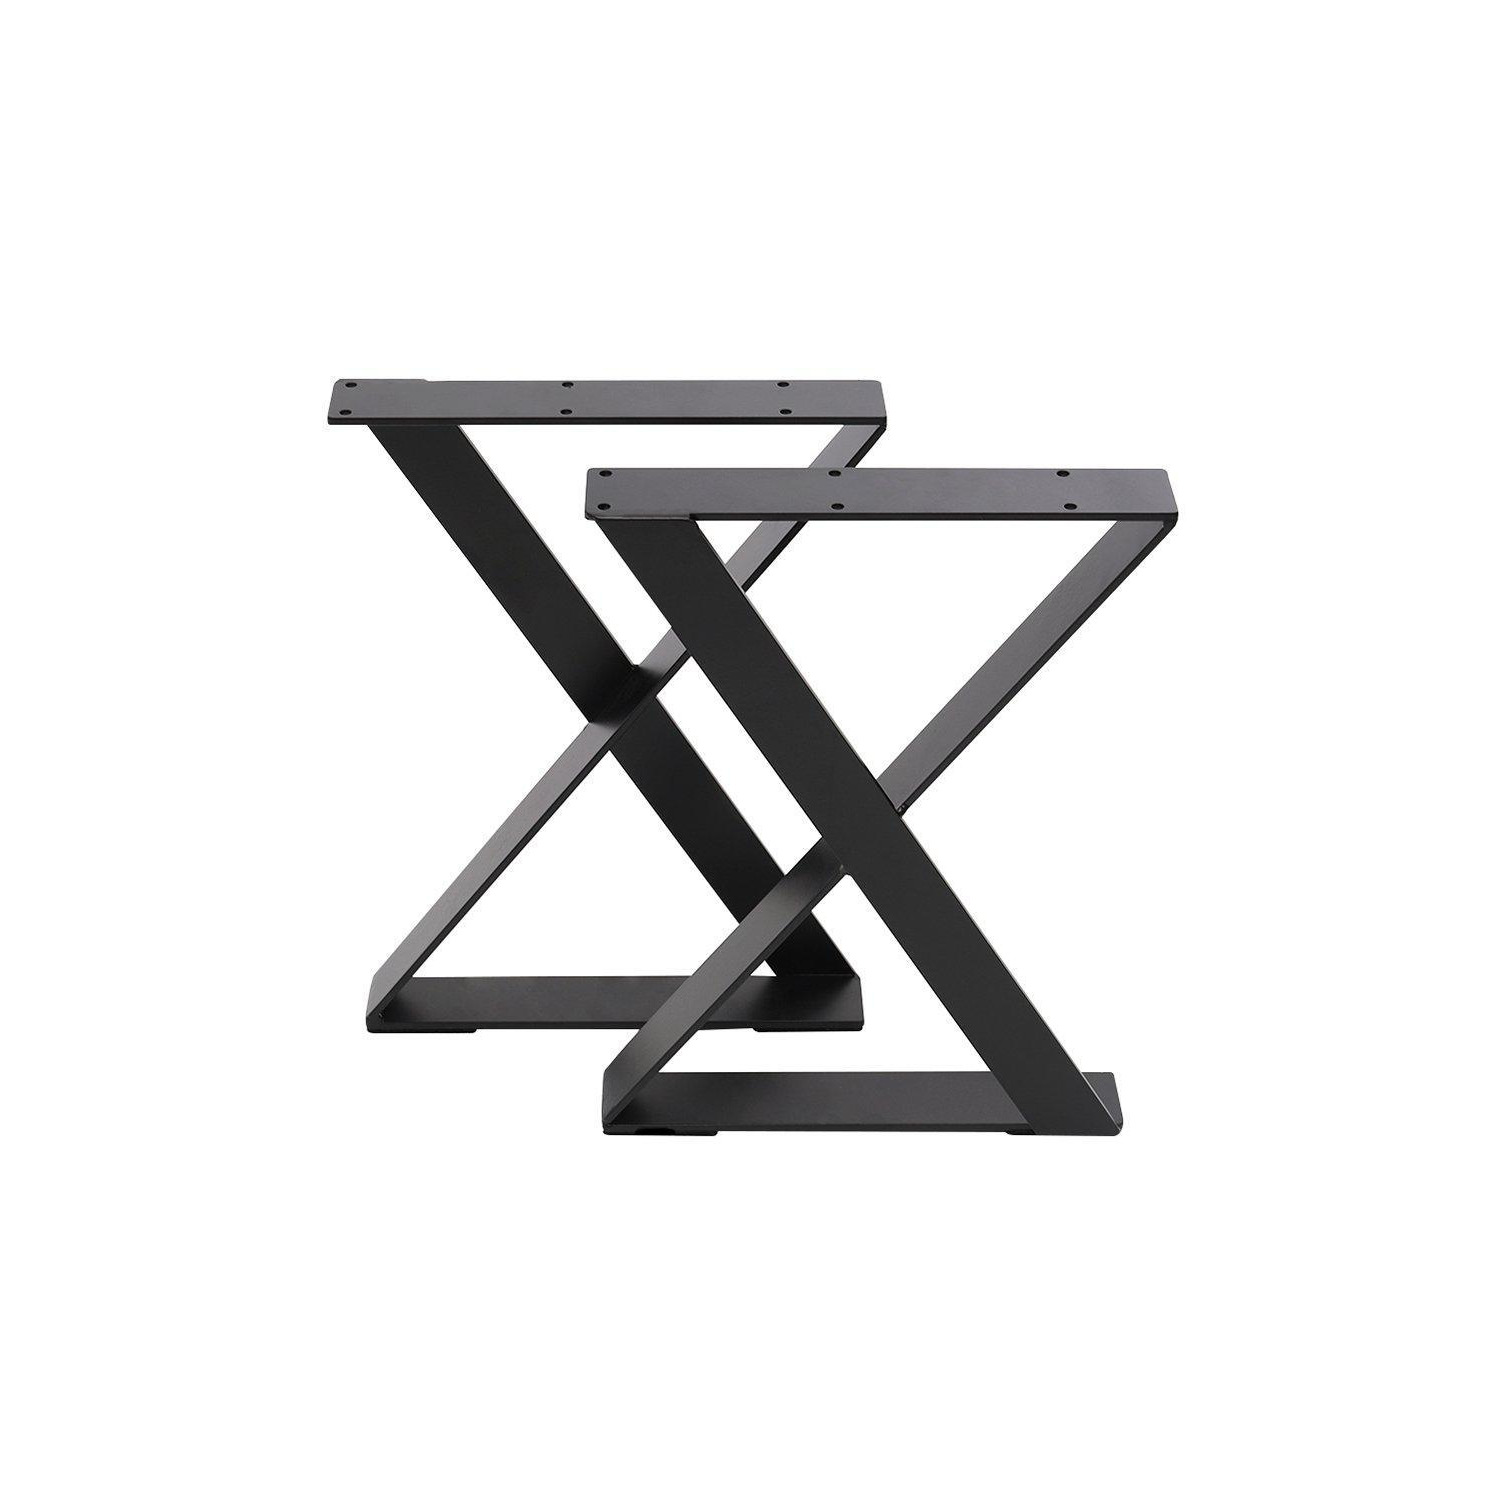 30x5x40cm Industrial Heavy Duty X Shape Iron Table Legs - image 1